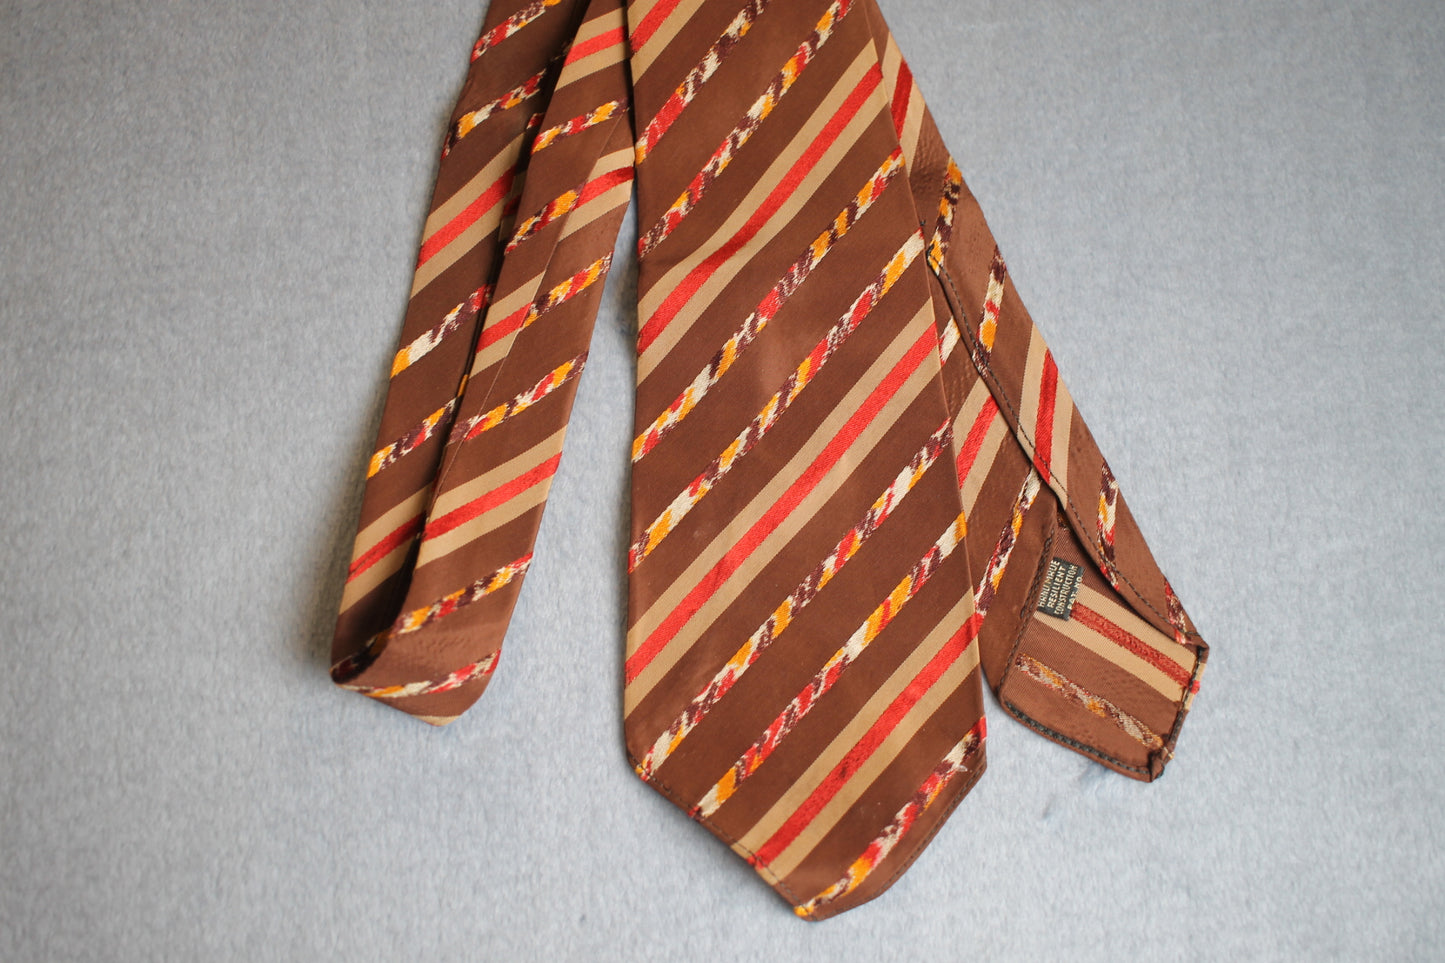 Vintage 1940s/50s 2 tone brown red striped pattern swing tie